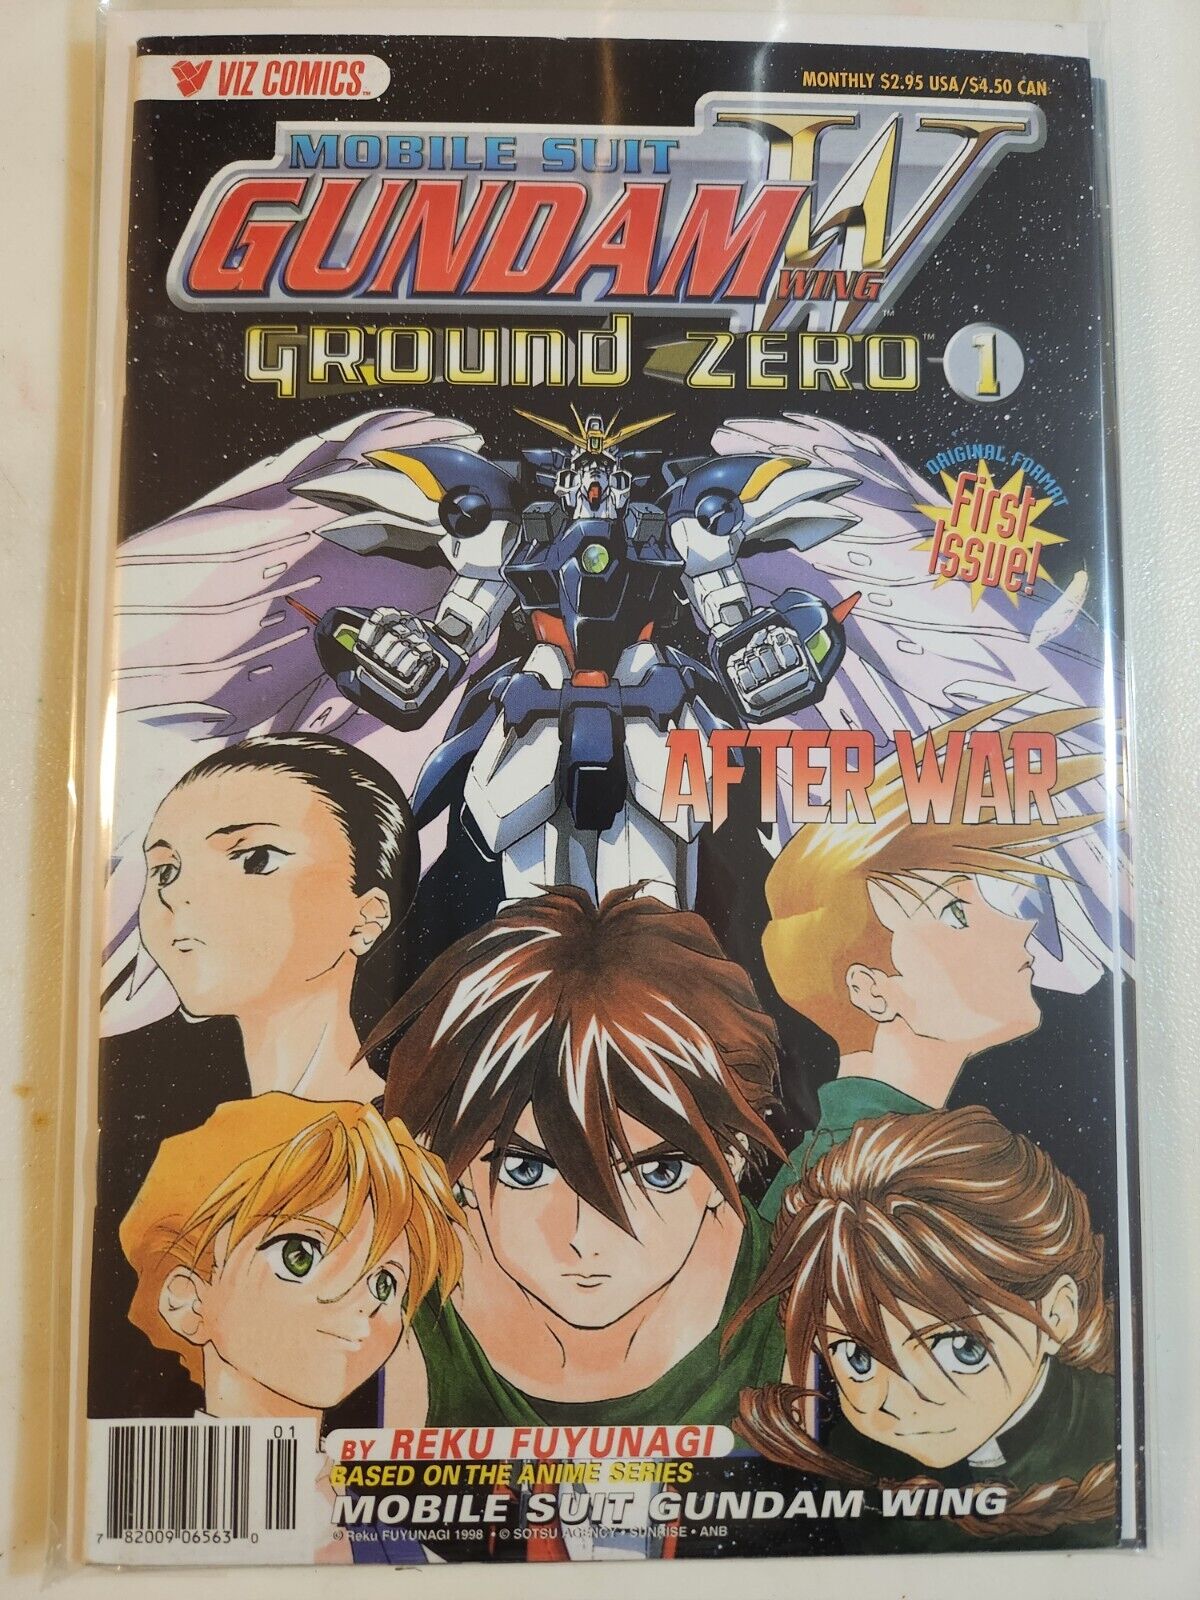 Mobile Suit Gundam Wing: Ground Zero #1 VIZ COMIC BOOK 7.0 AVG V31-44